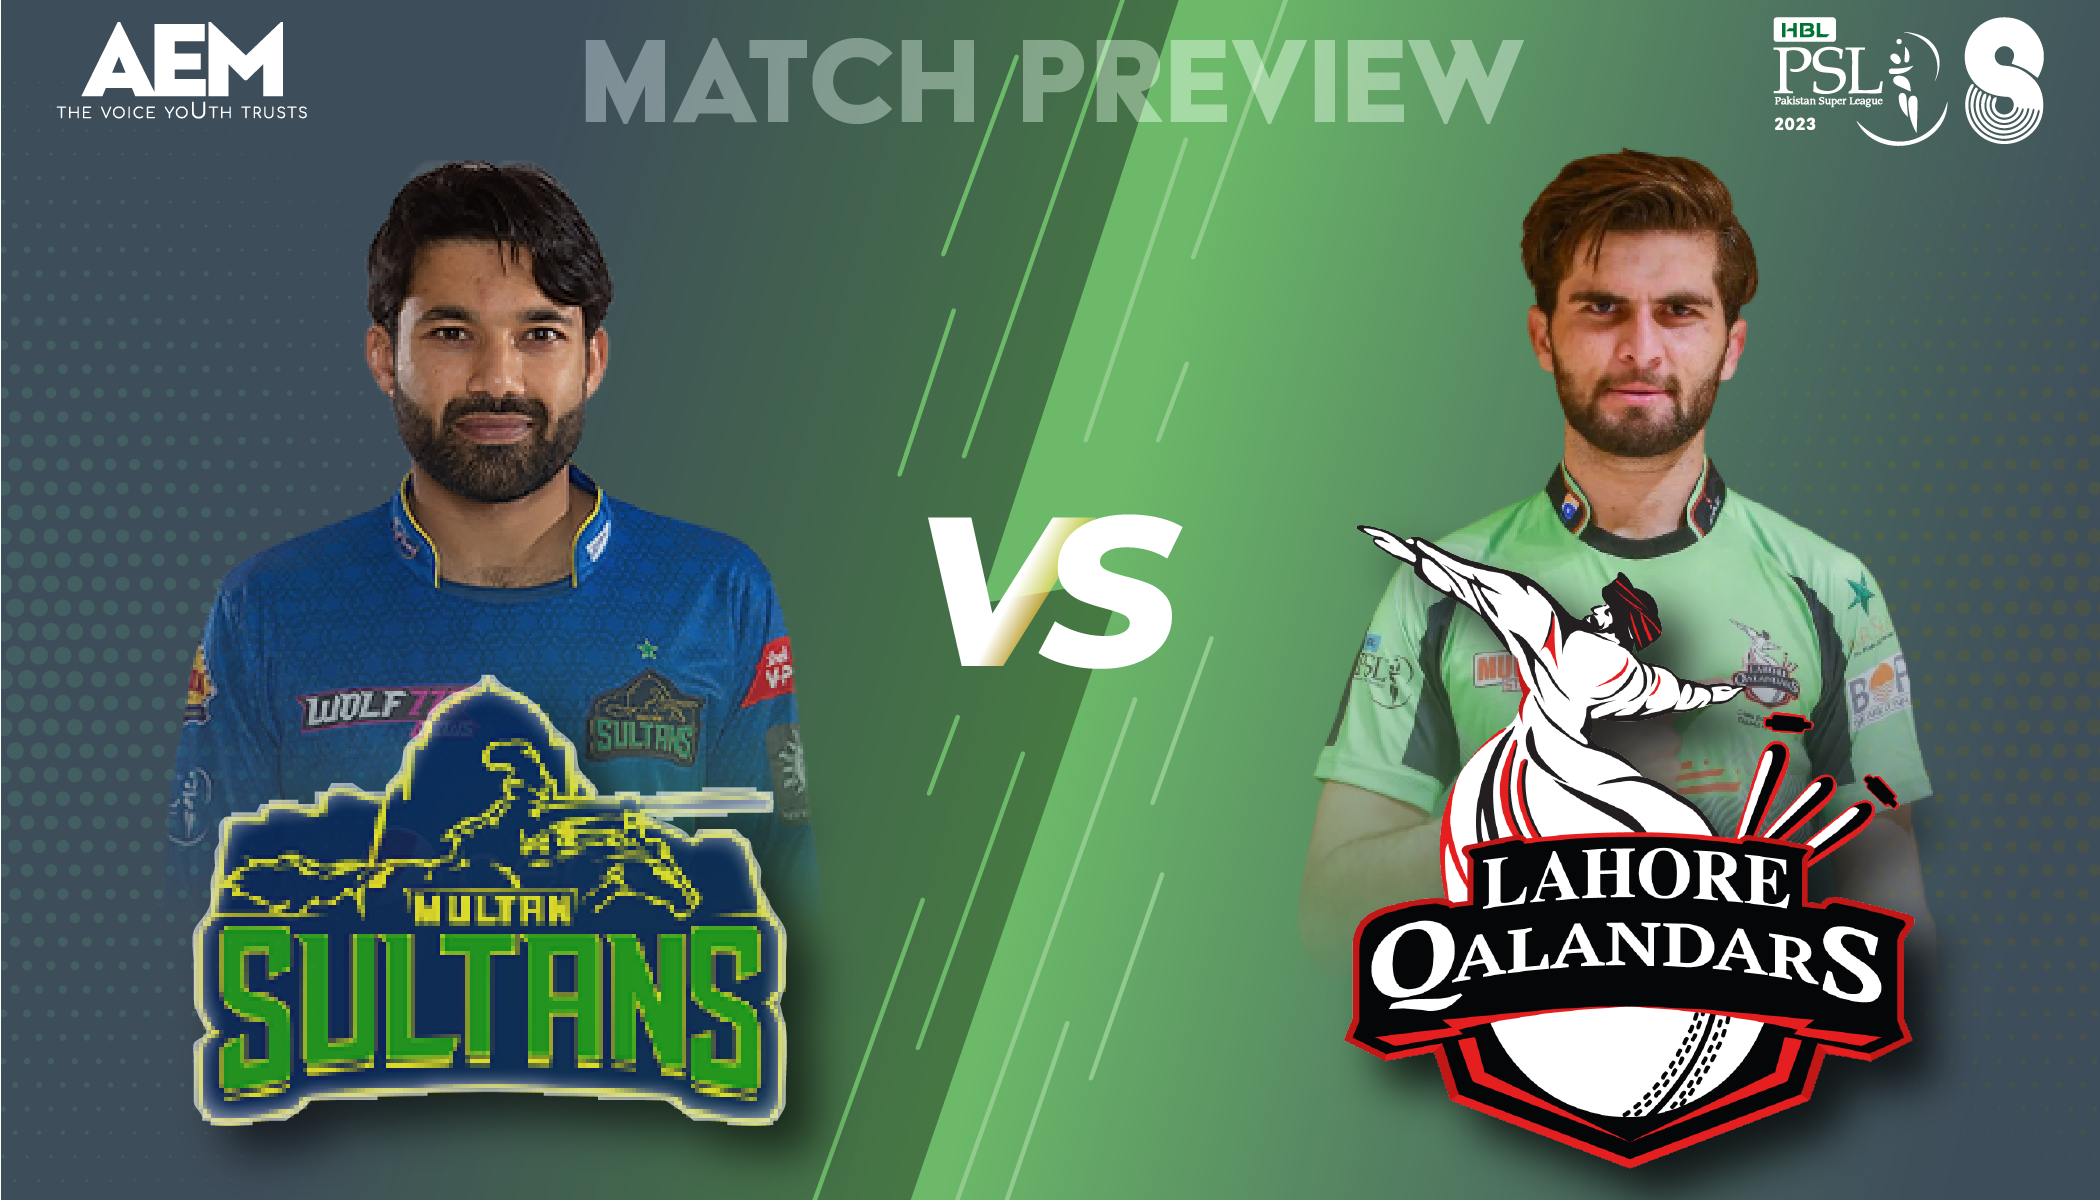 Match Preview Of Multan Sultan Vs Lahore Qalanadars By Aem Article